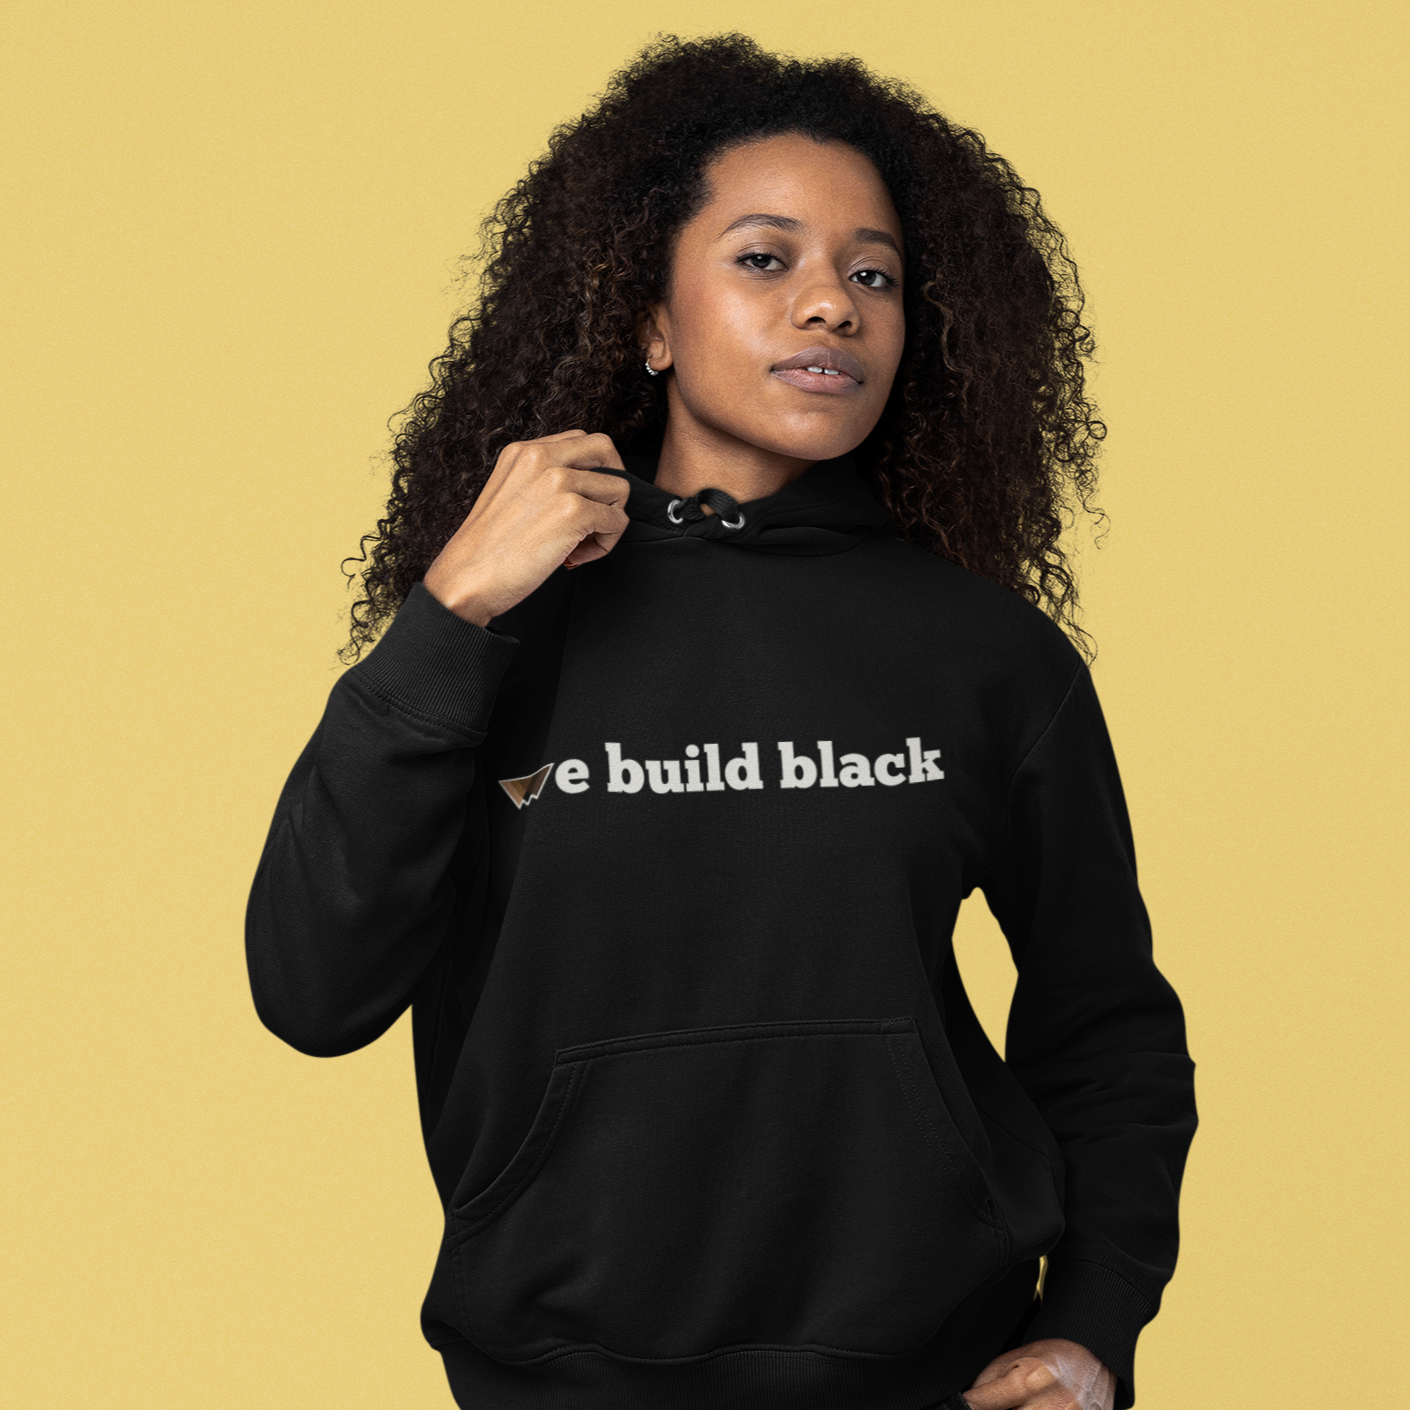 We Build Black logo sweatshirt with kangaroo pocket and drawstring hood in black